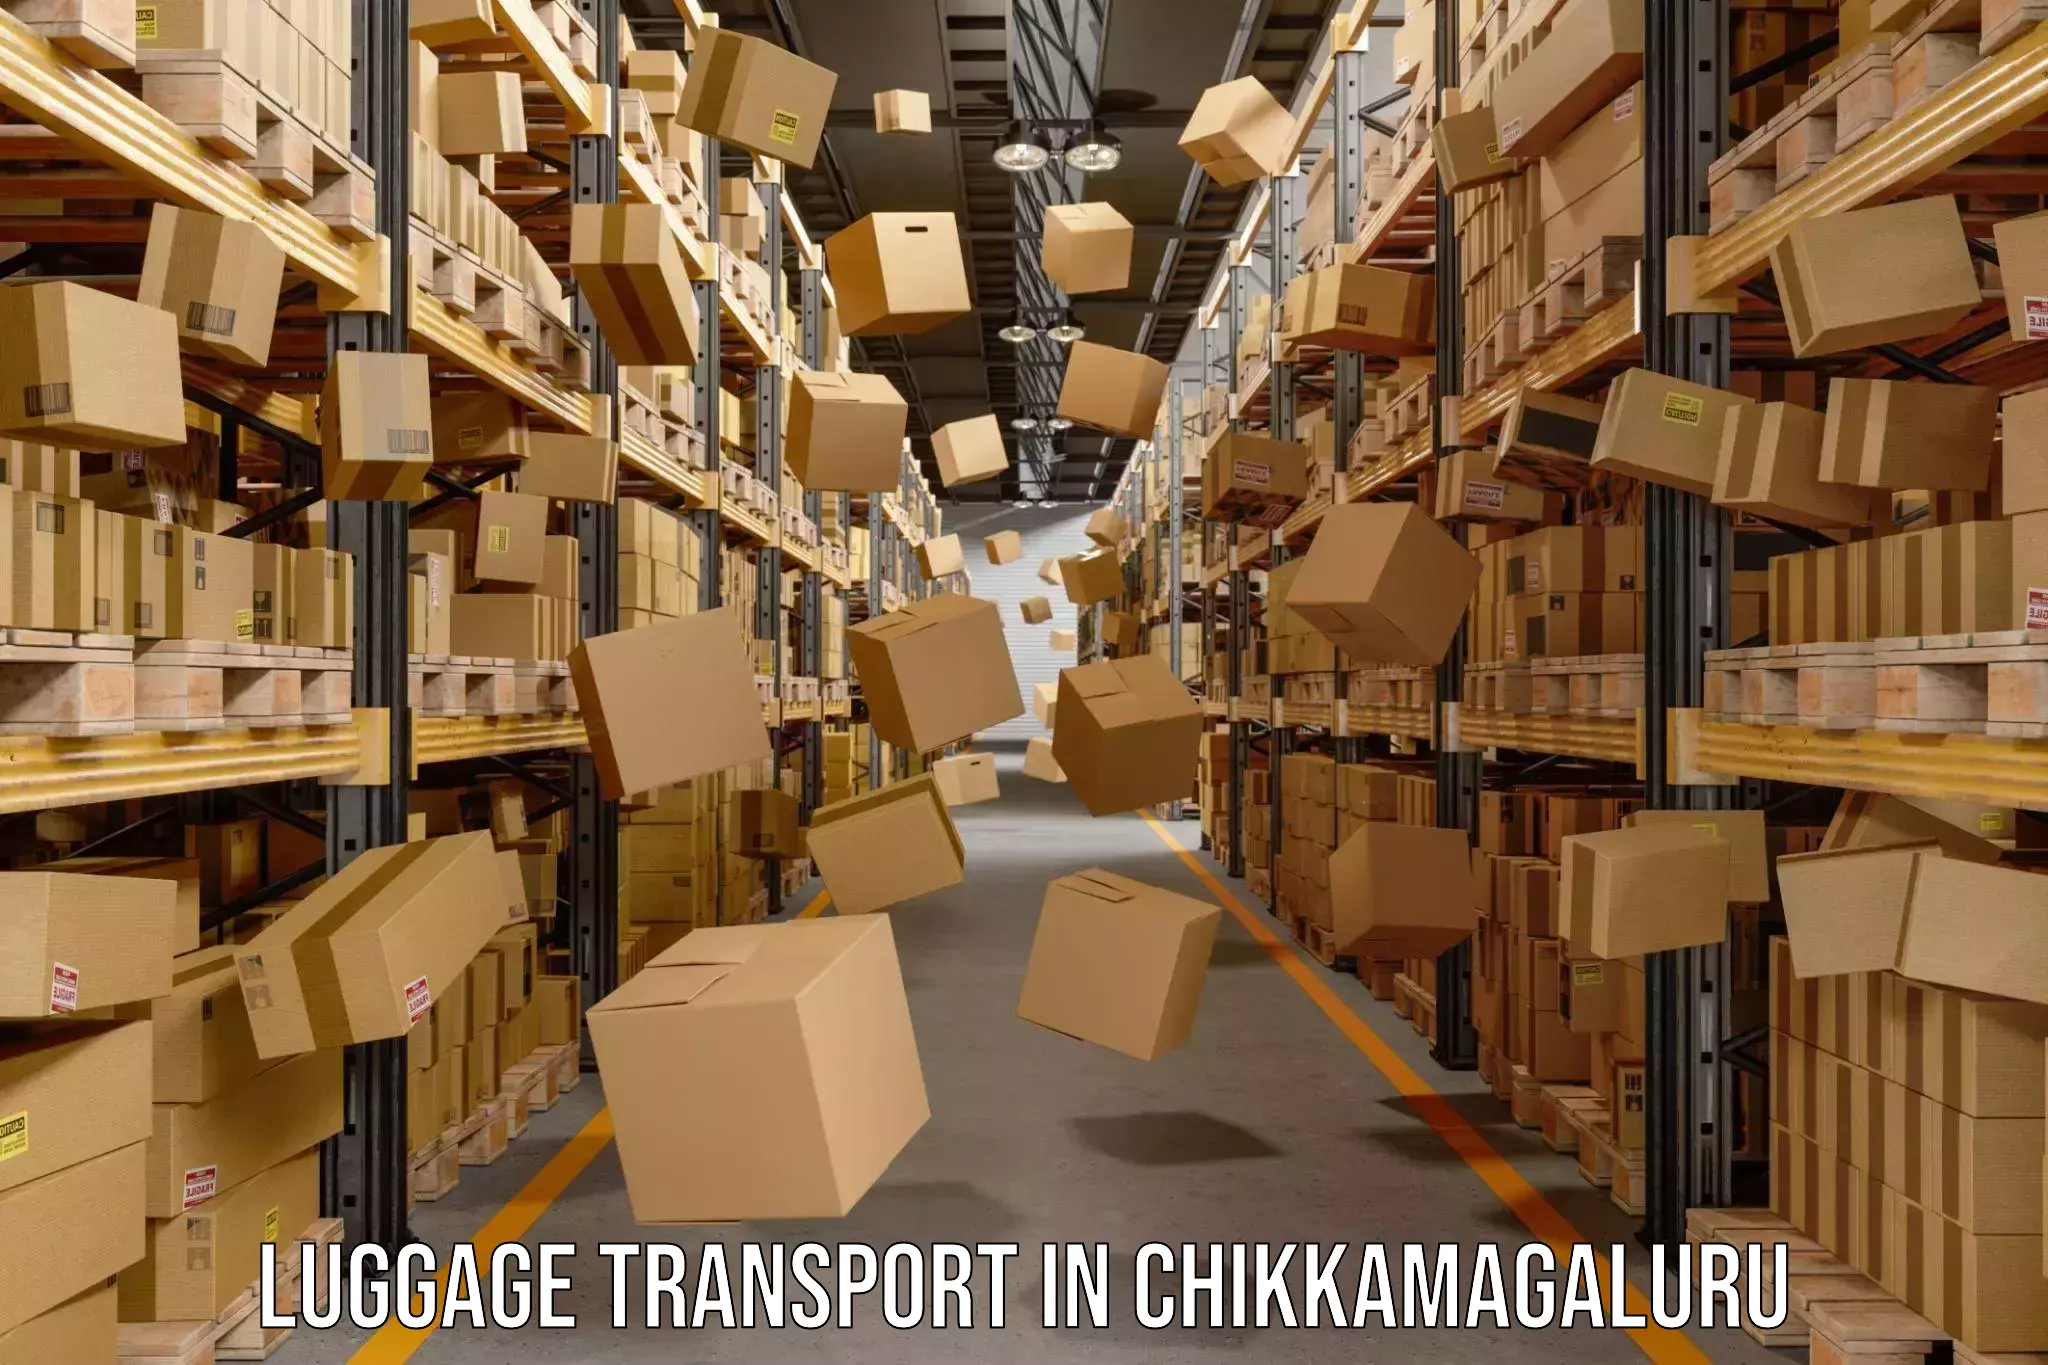 Baggage transport innovation in Chikkamagaluru